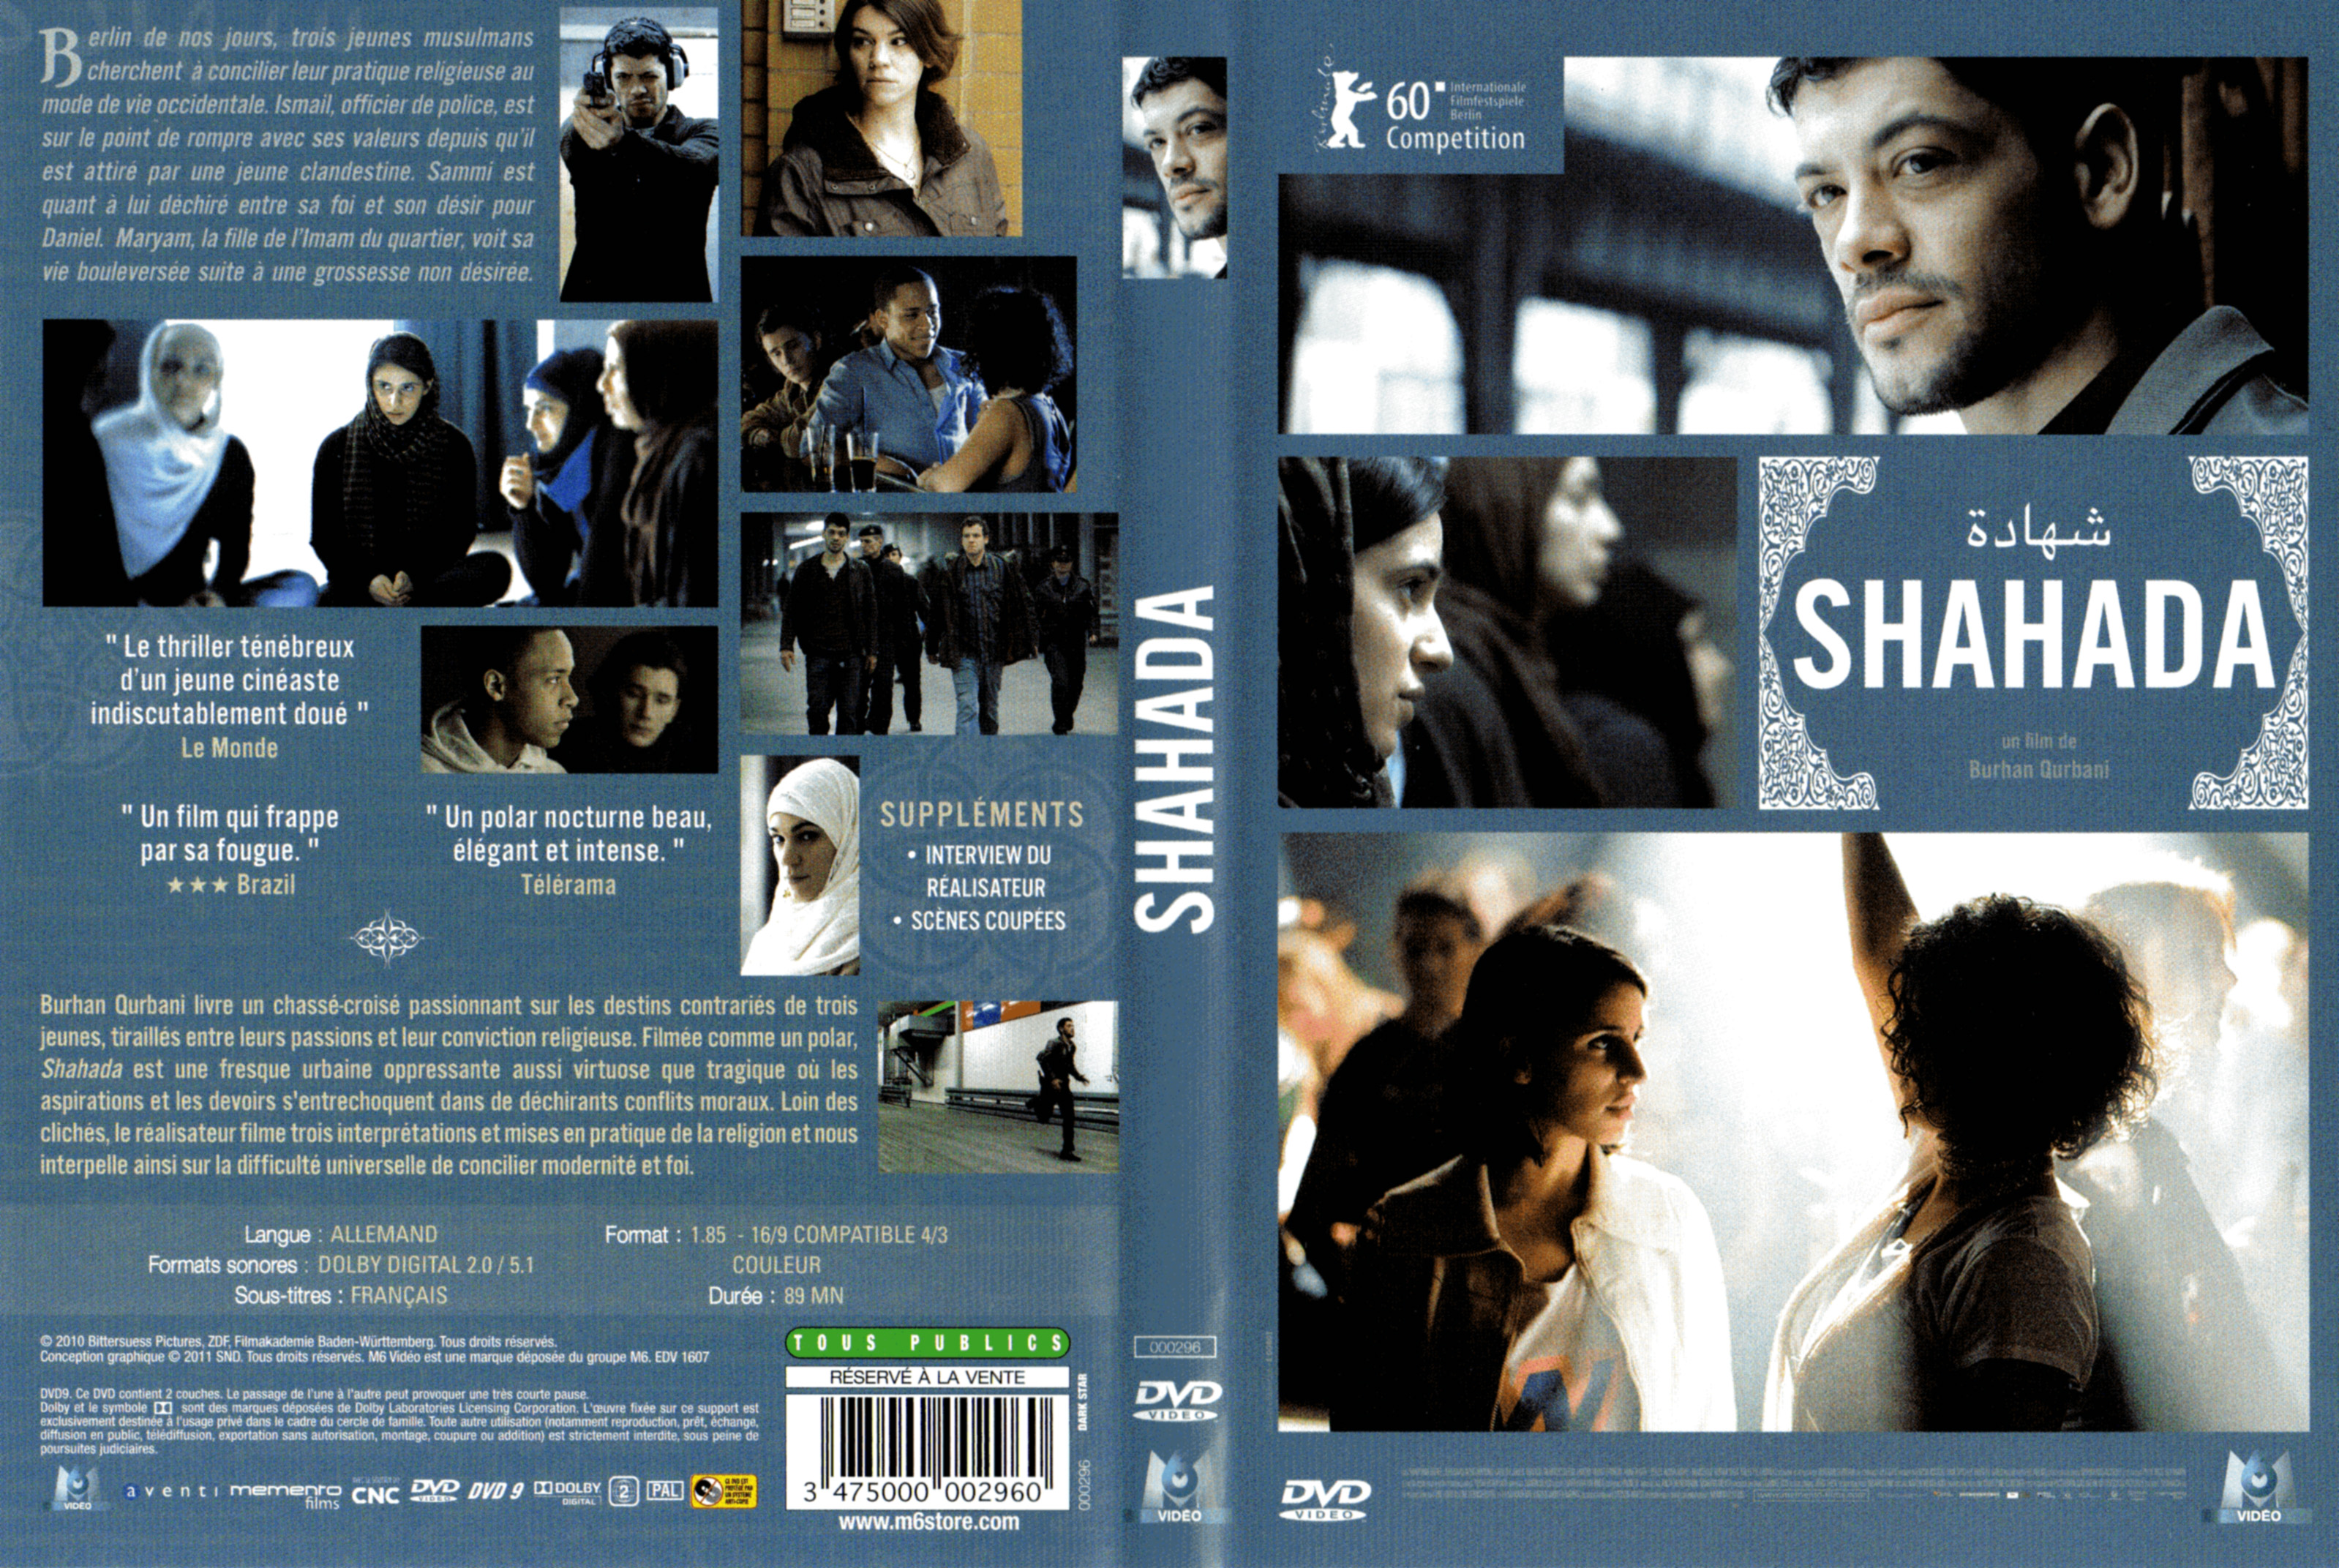 Jaquette DVD Shahada